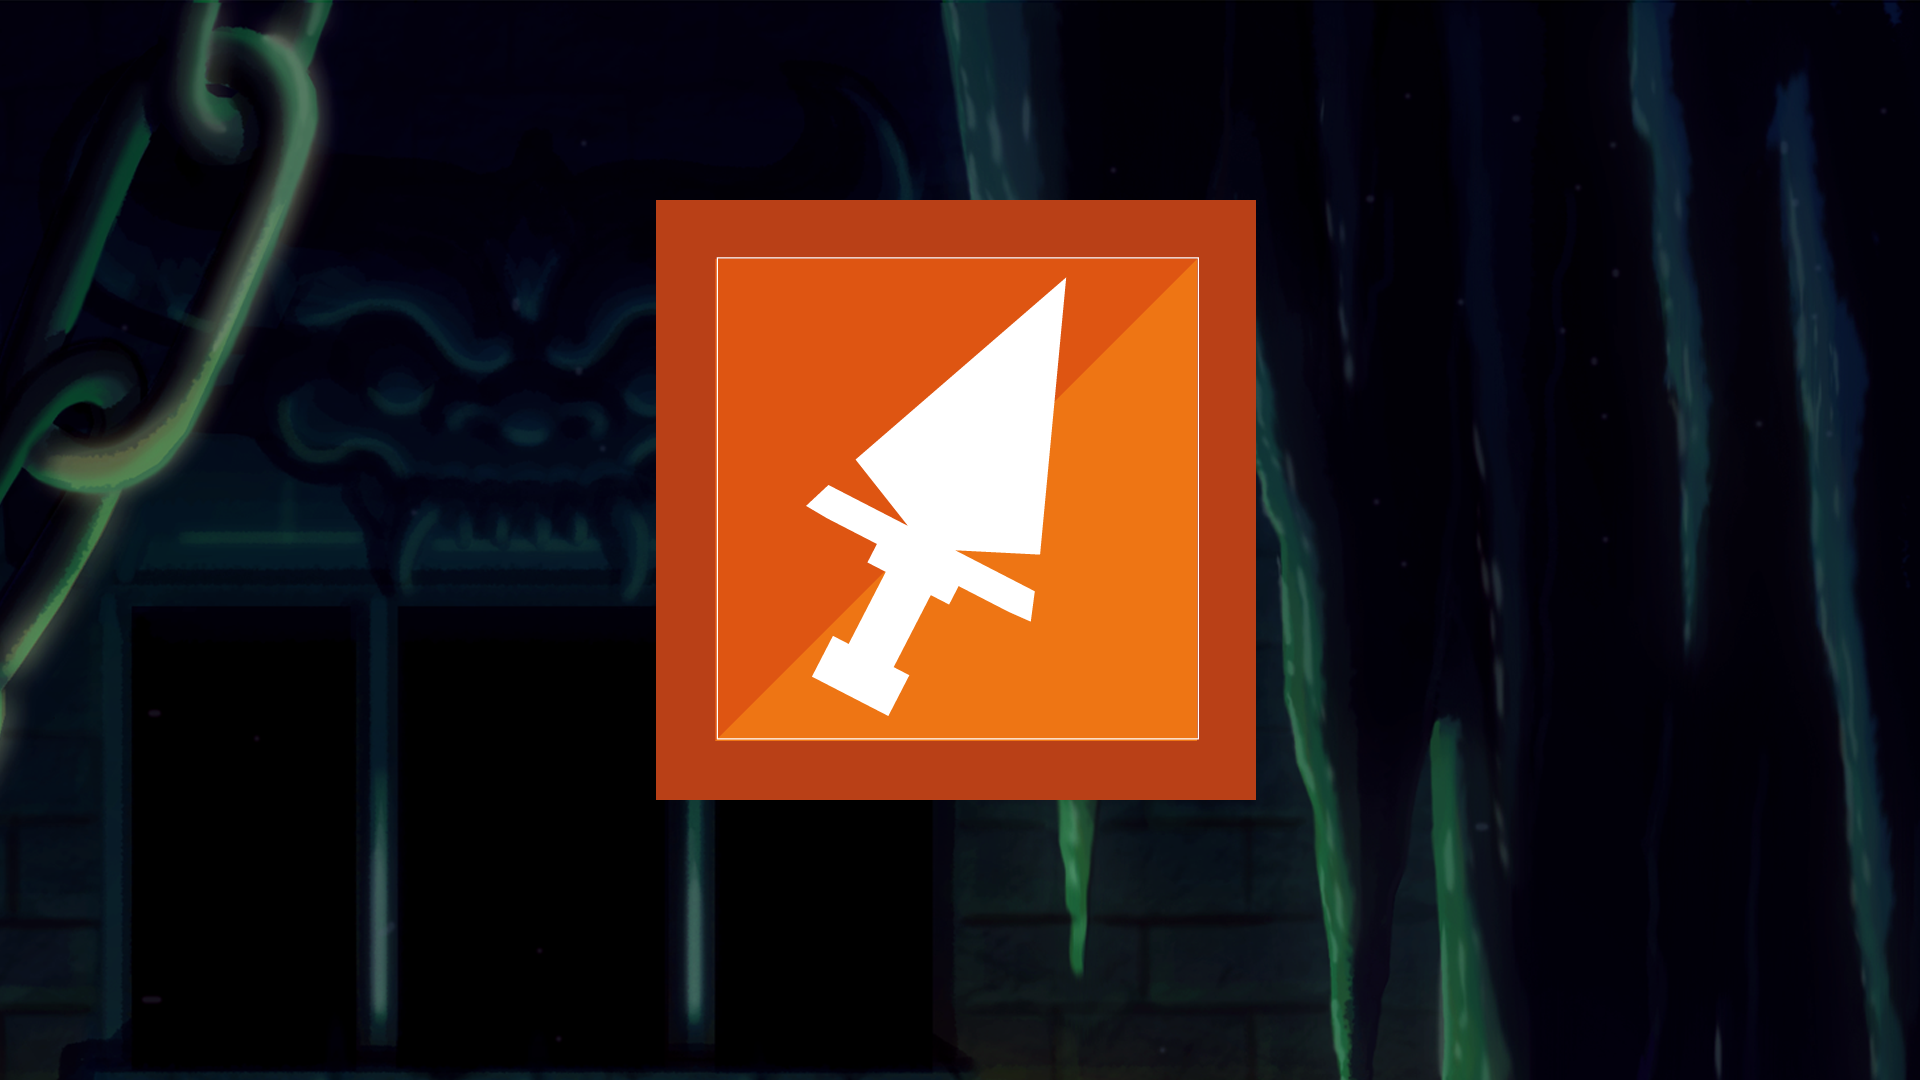 Icon for Swordsman